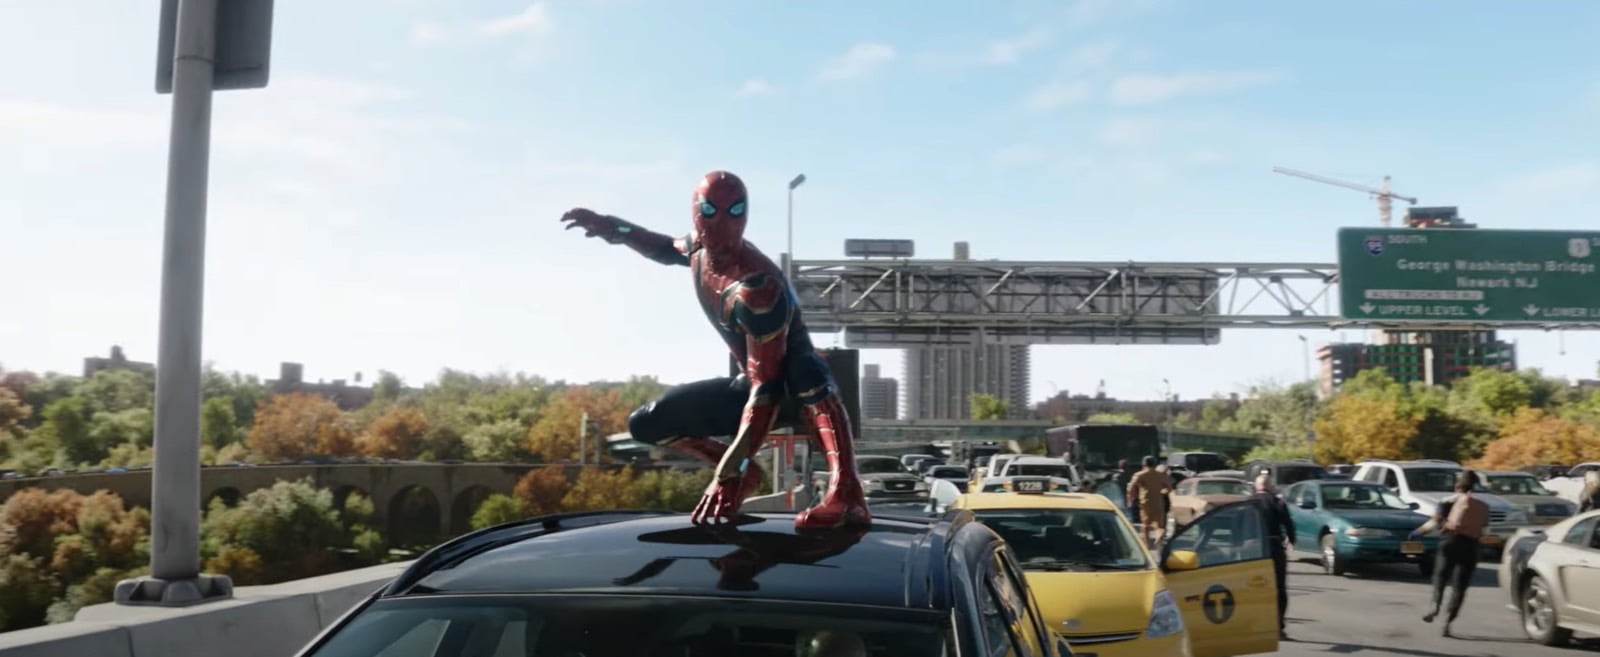 Tom Holland Bocorin Salah Satu Adegan Di Spider-Man: No Way Home!